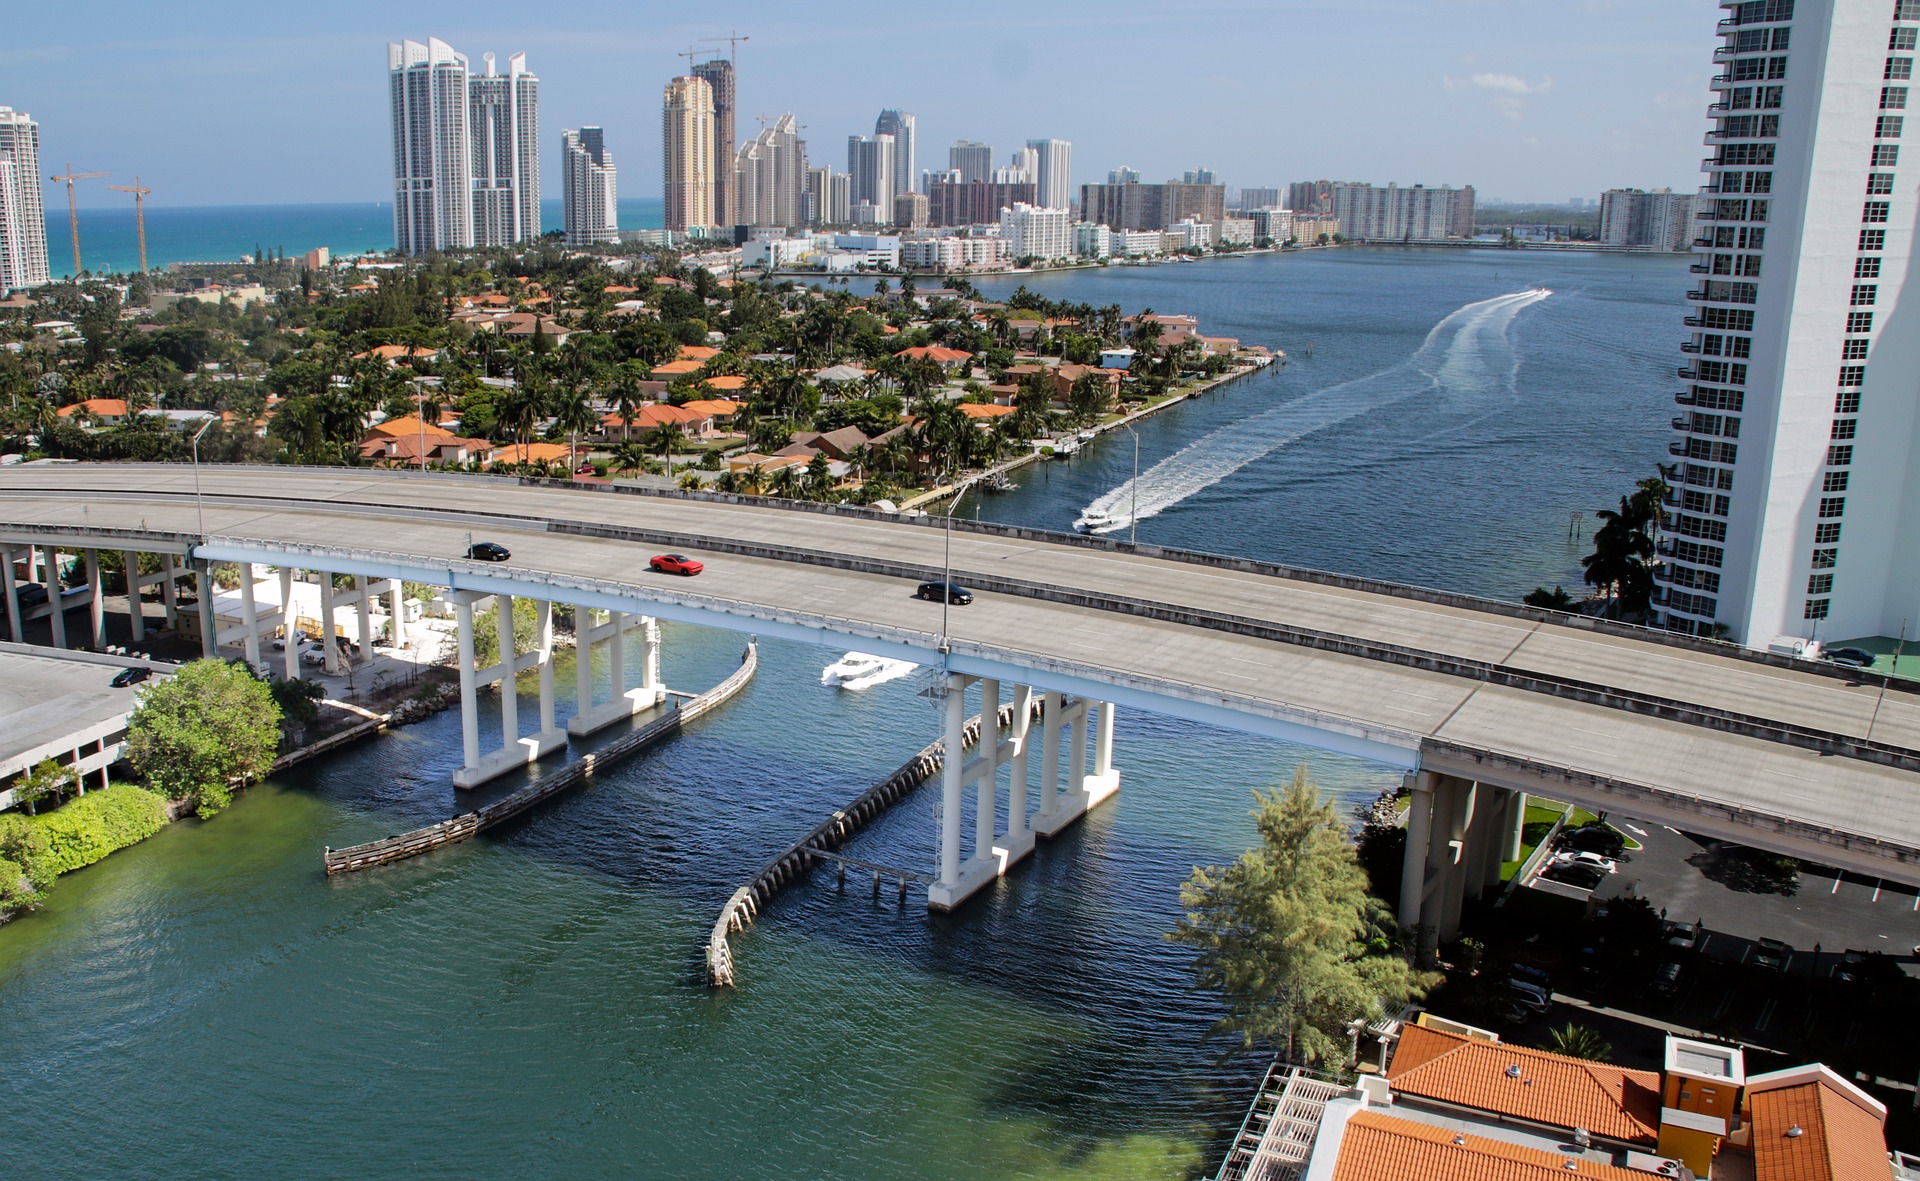 Miami-Dade County will allow accessory dwelling units Image by yanivmatza from Pixabay 